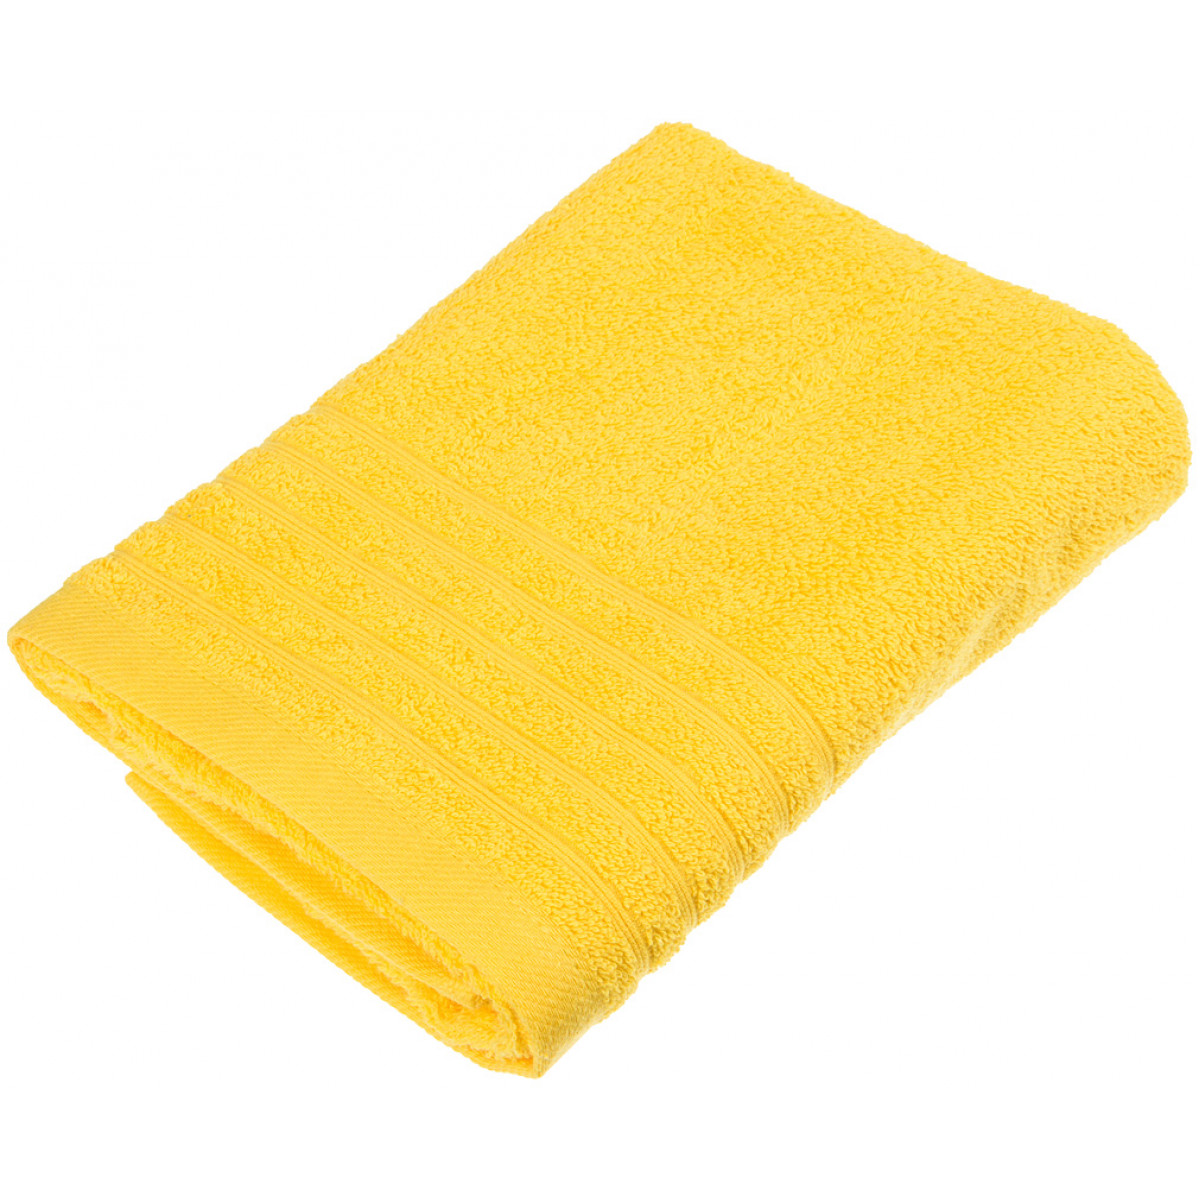 Полотенце Lessie  (50х90 см), размер 50х90 см, цвет желтый sno301457 Полотенце Lessie  (50х90 см) - фото 1